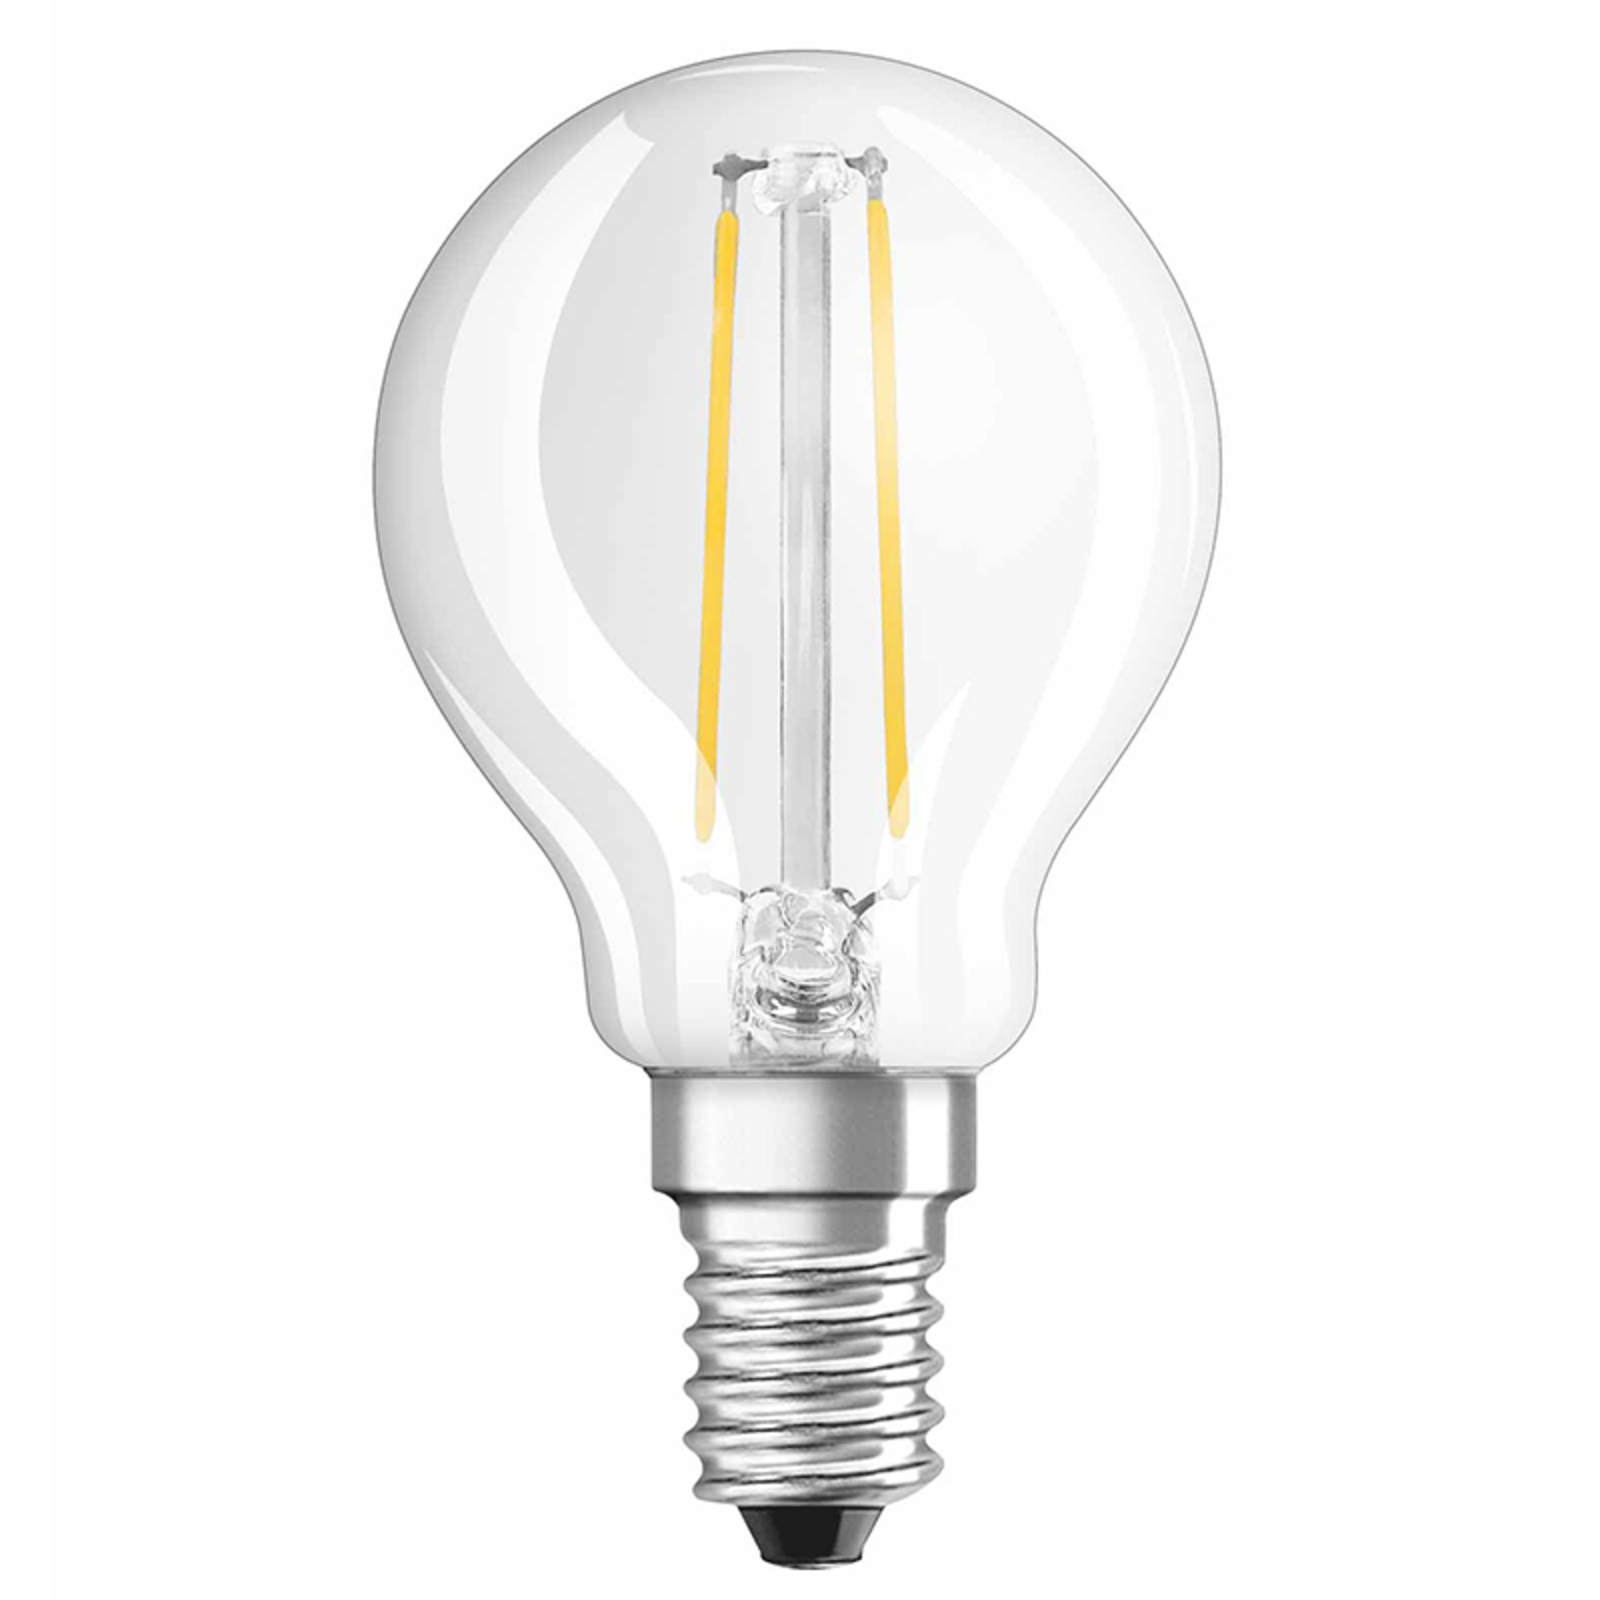 OSRAM golf ball LED bulb E14 2.5 W 827 retrofit